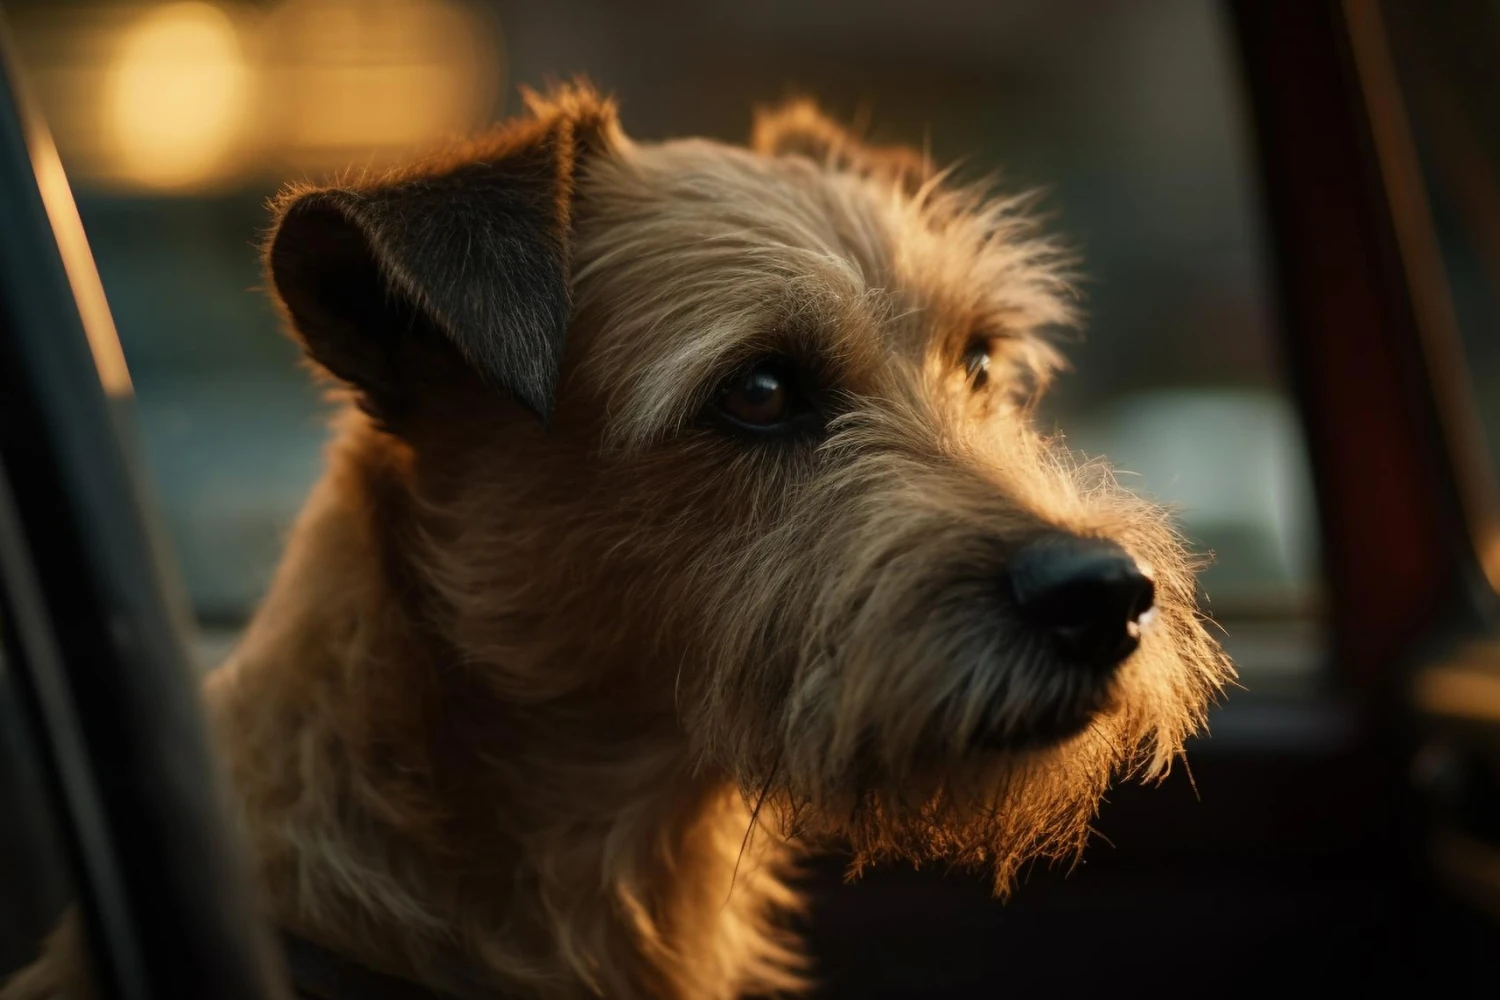 Honda Accord Dog Car Seat for Glen of Imaal Terriers